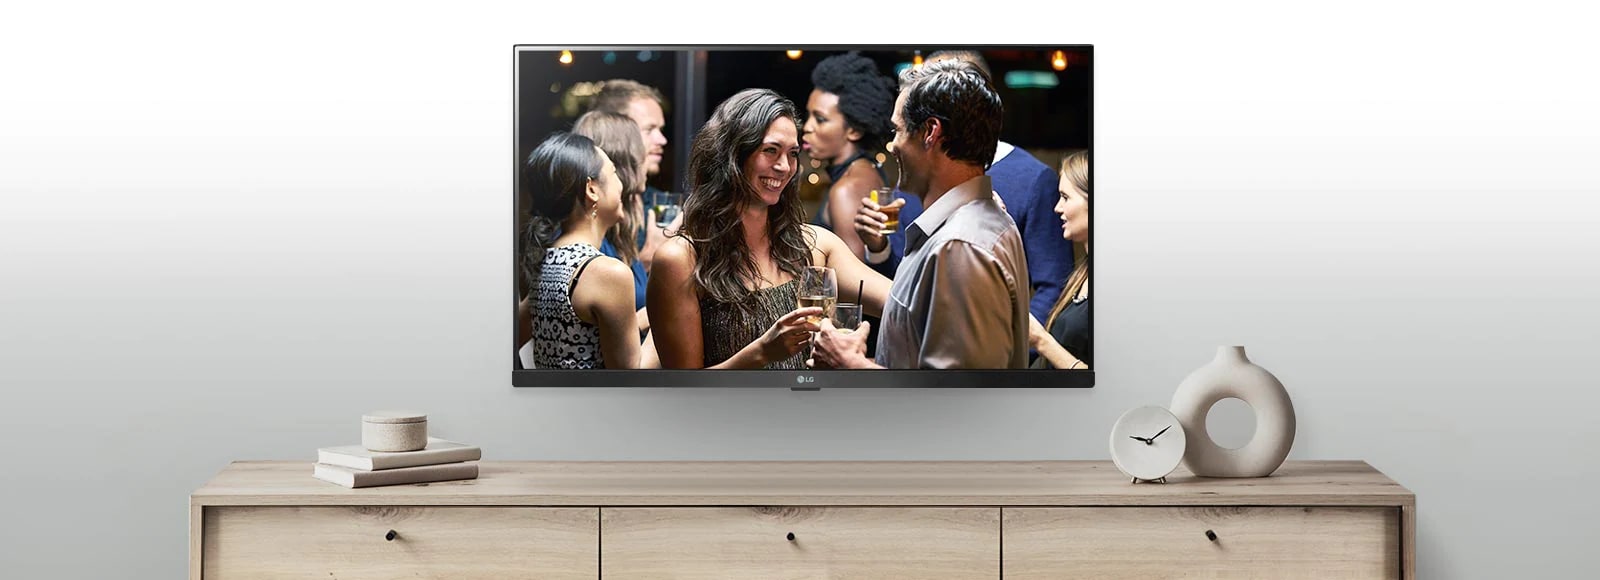 Pantalla LED Full HD TV 27'' IPS - 27TQ625S-PS